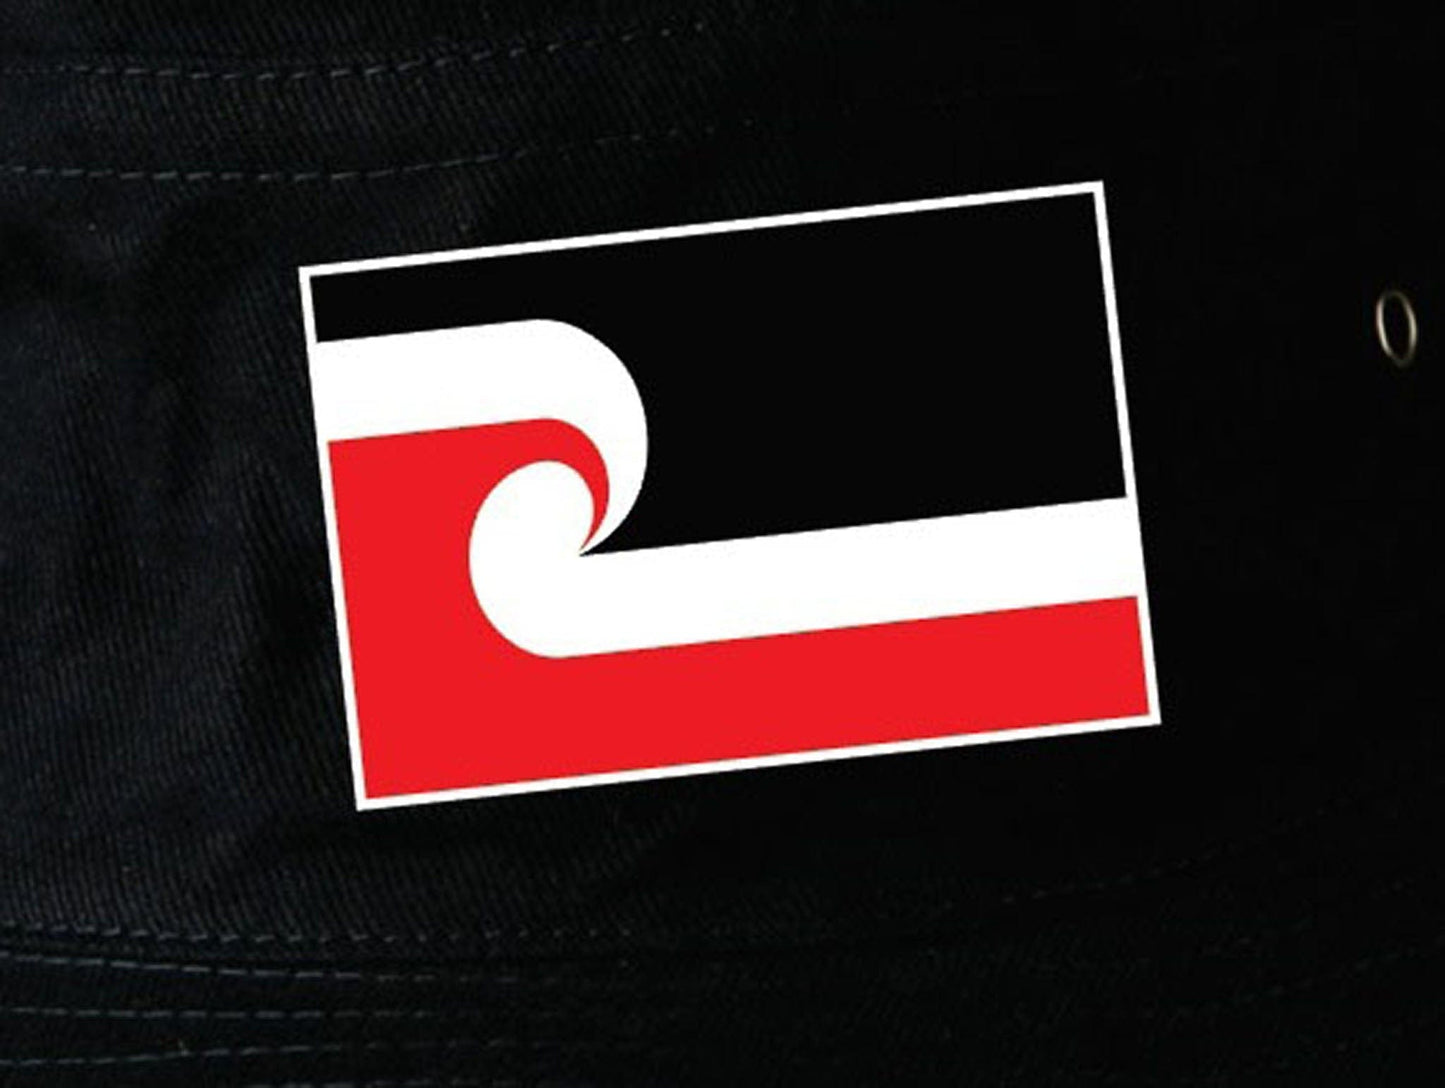 New Zealand Maori Flag Soft Cotton Bucket Hat